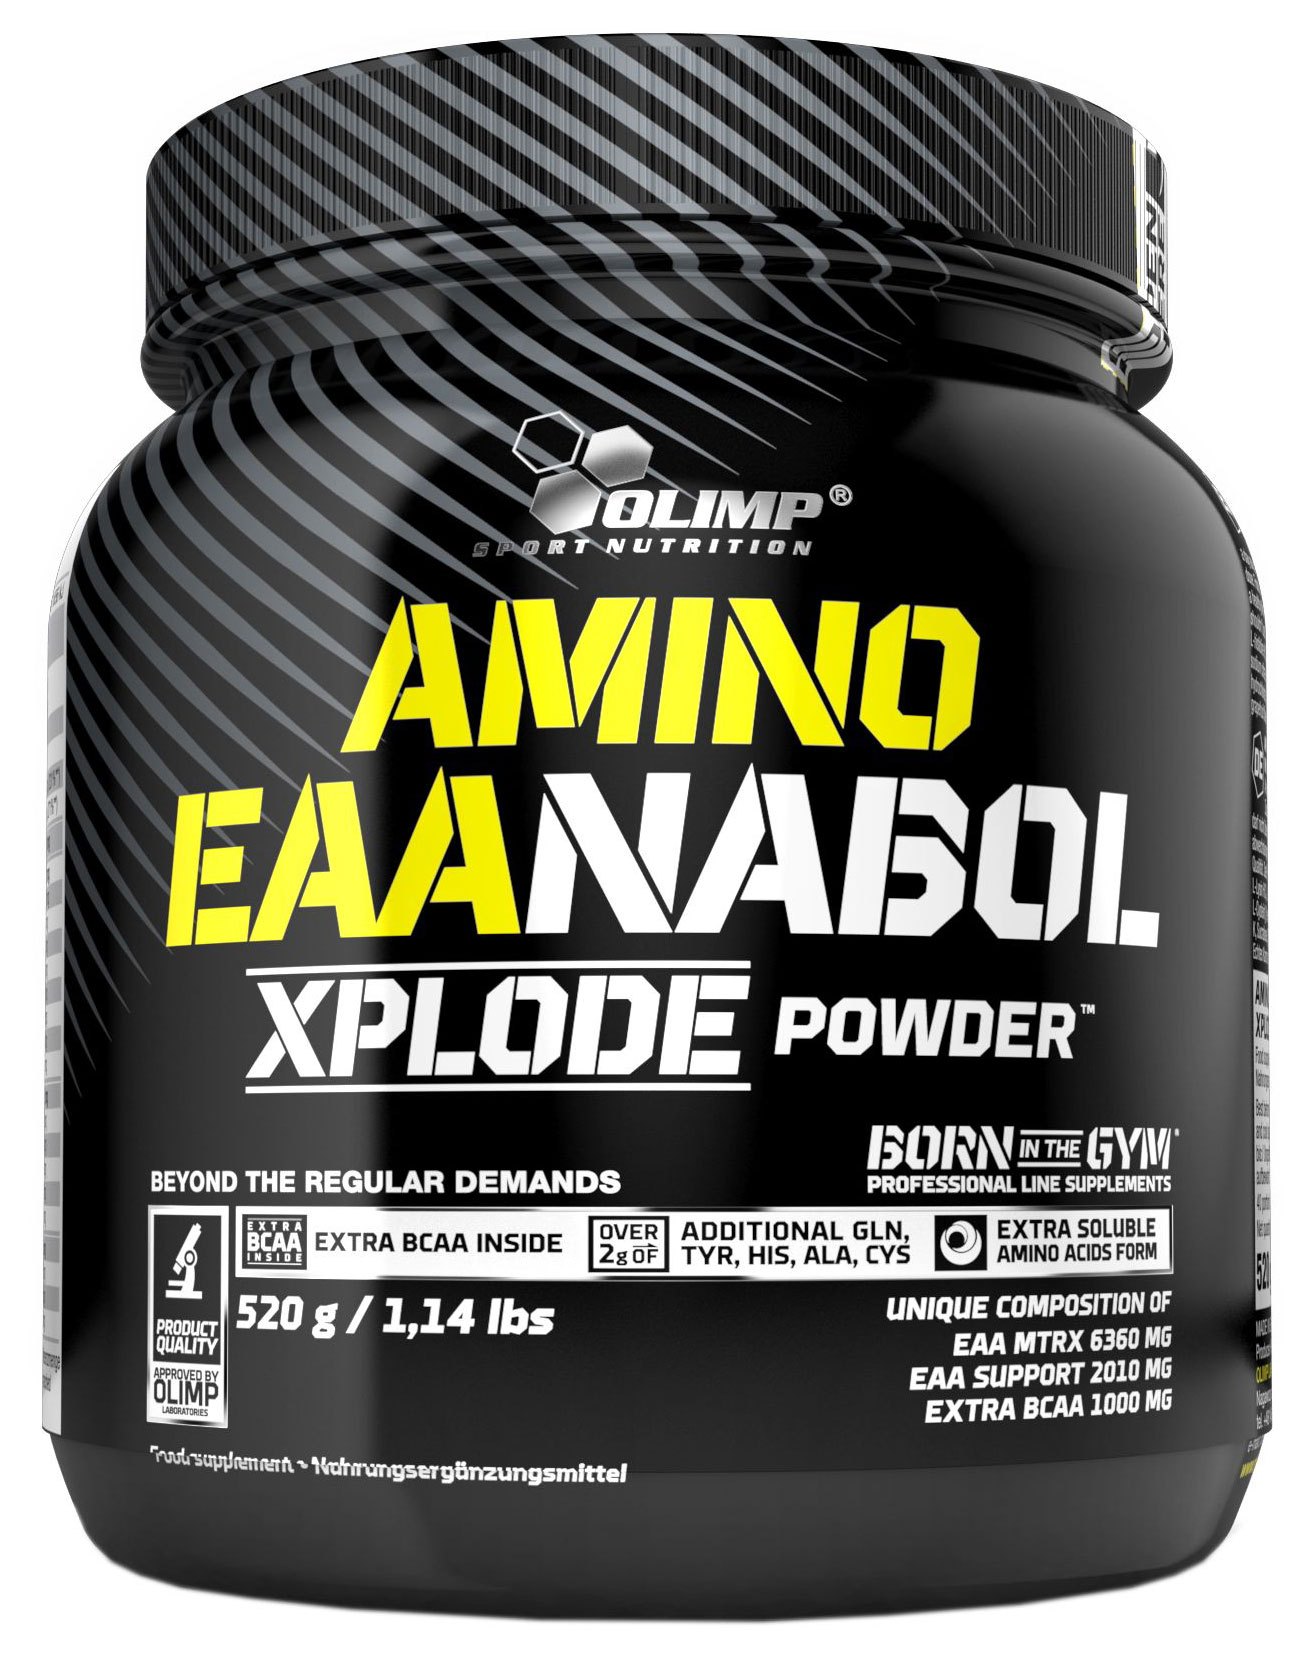 Amino EAAnabol Xplode Powder Olimp, 520 г, pineapple